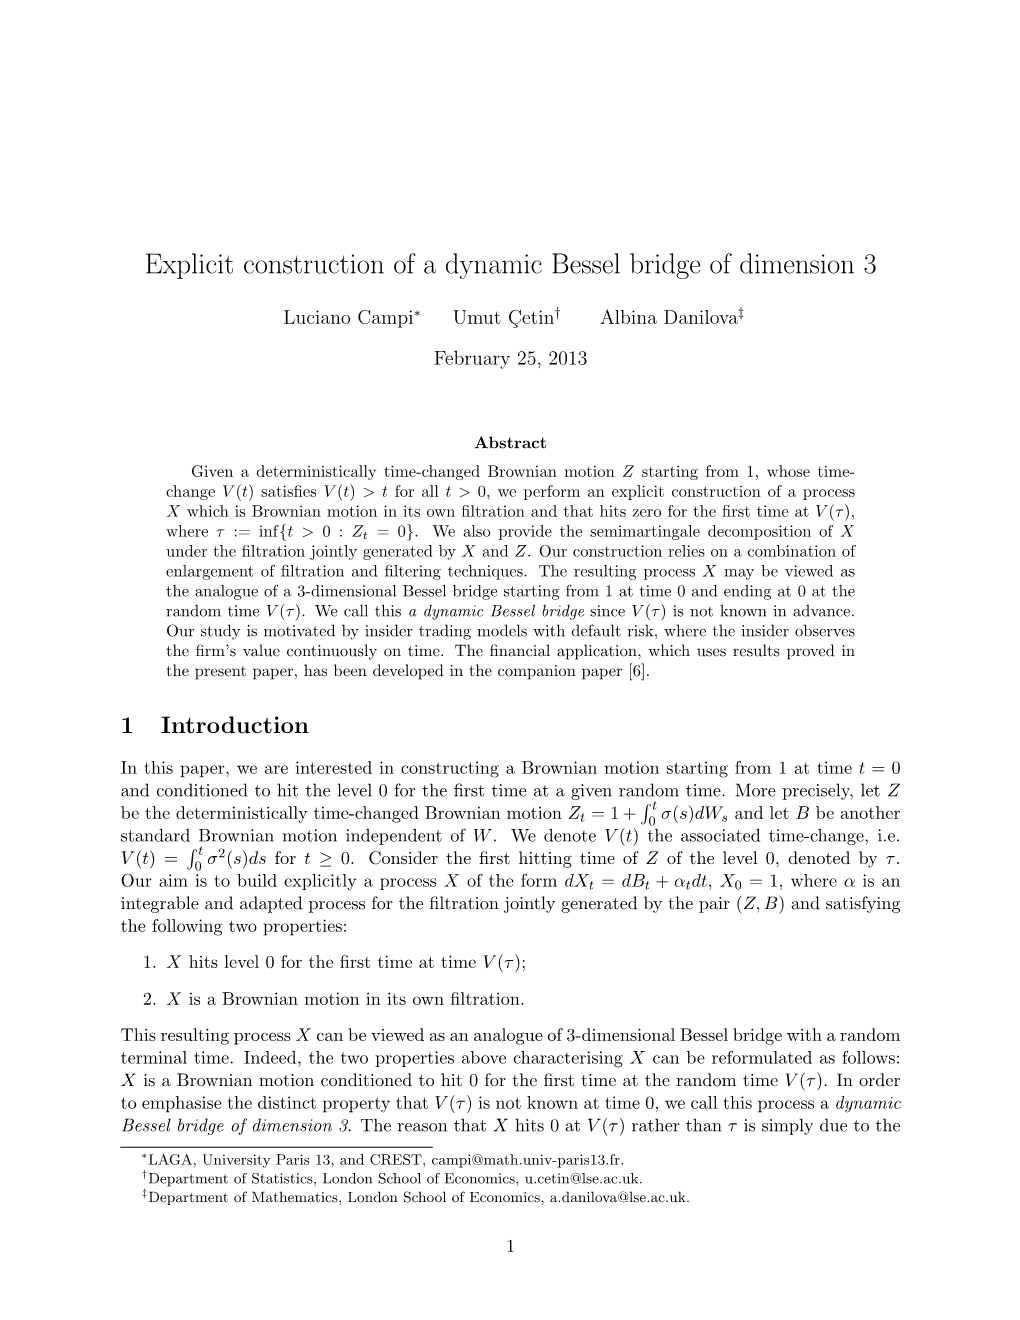 Explicit Construction of a Dynamic Bessel Bridge of Dimension 3